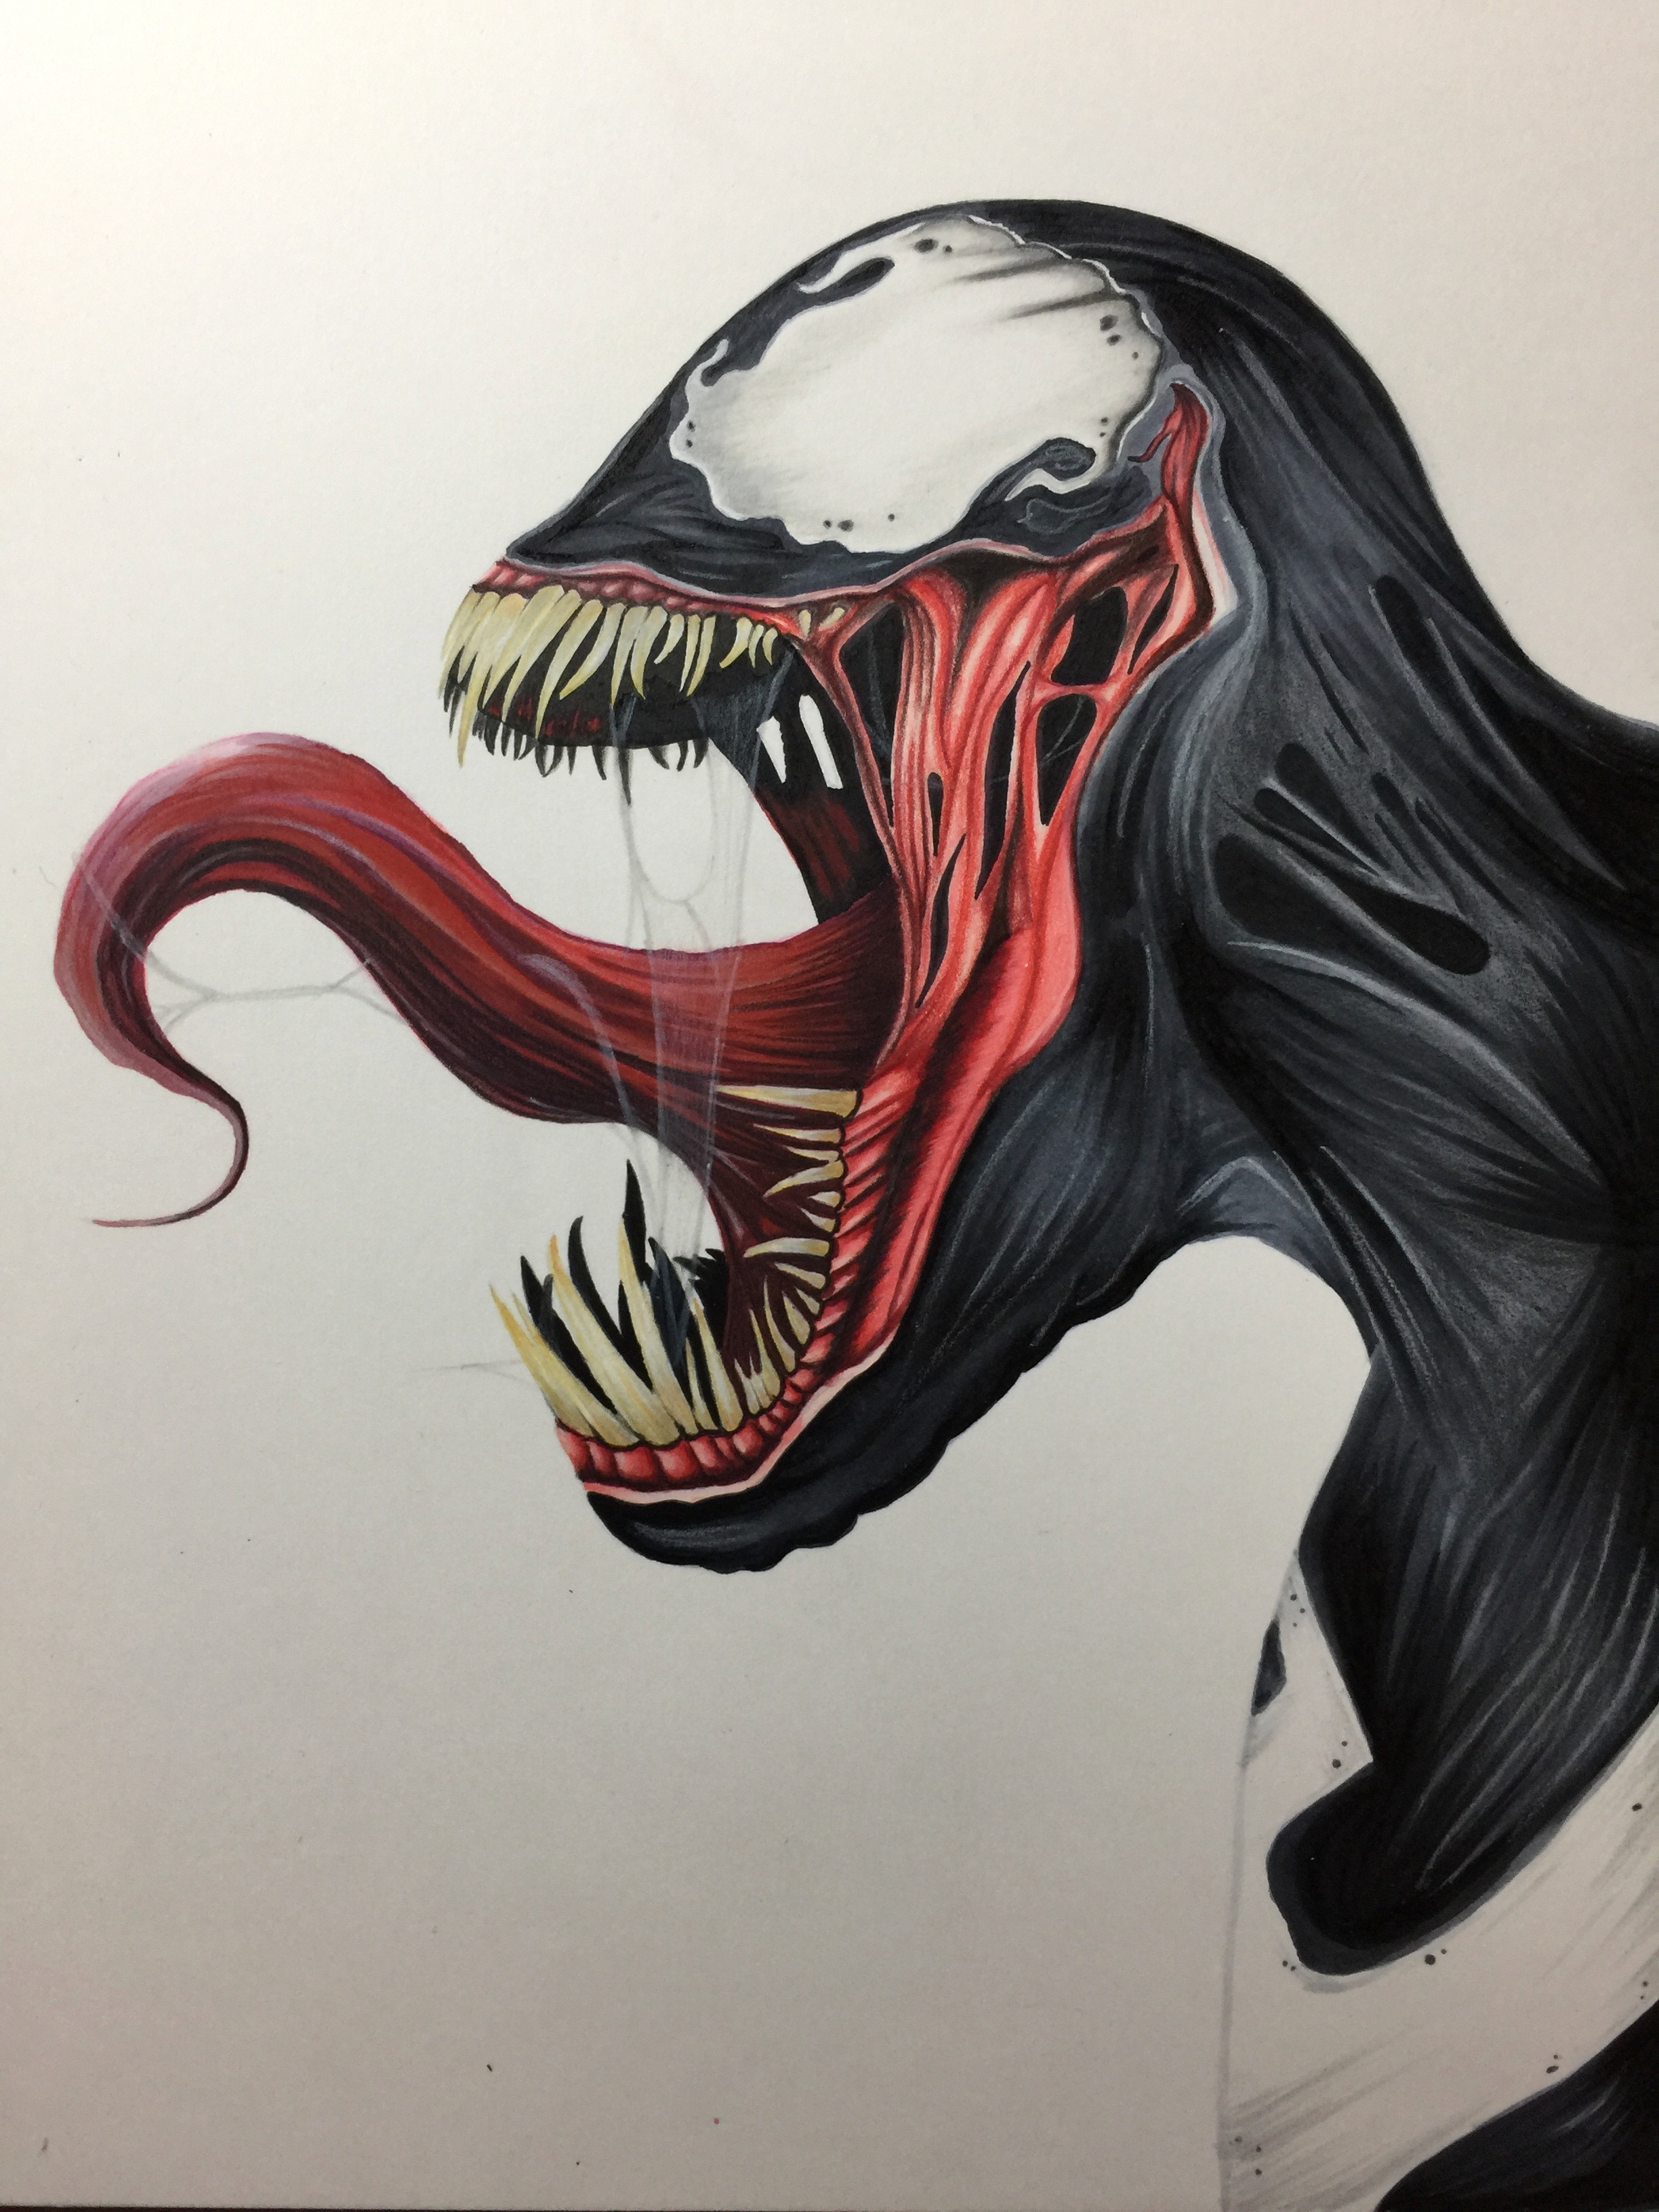 Spiderman Vs Venom Drawing by Matlopo - DragoArt